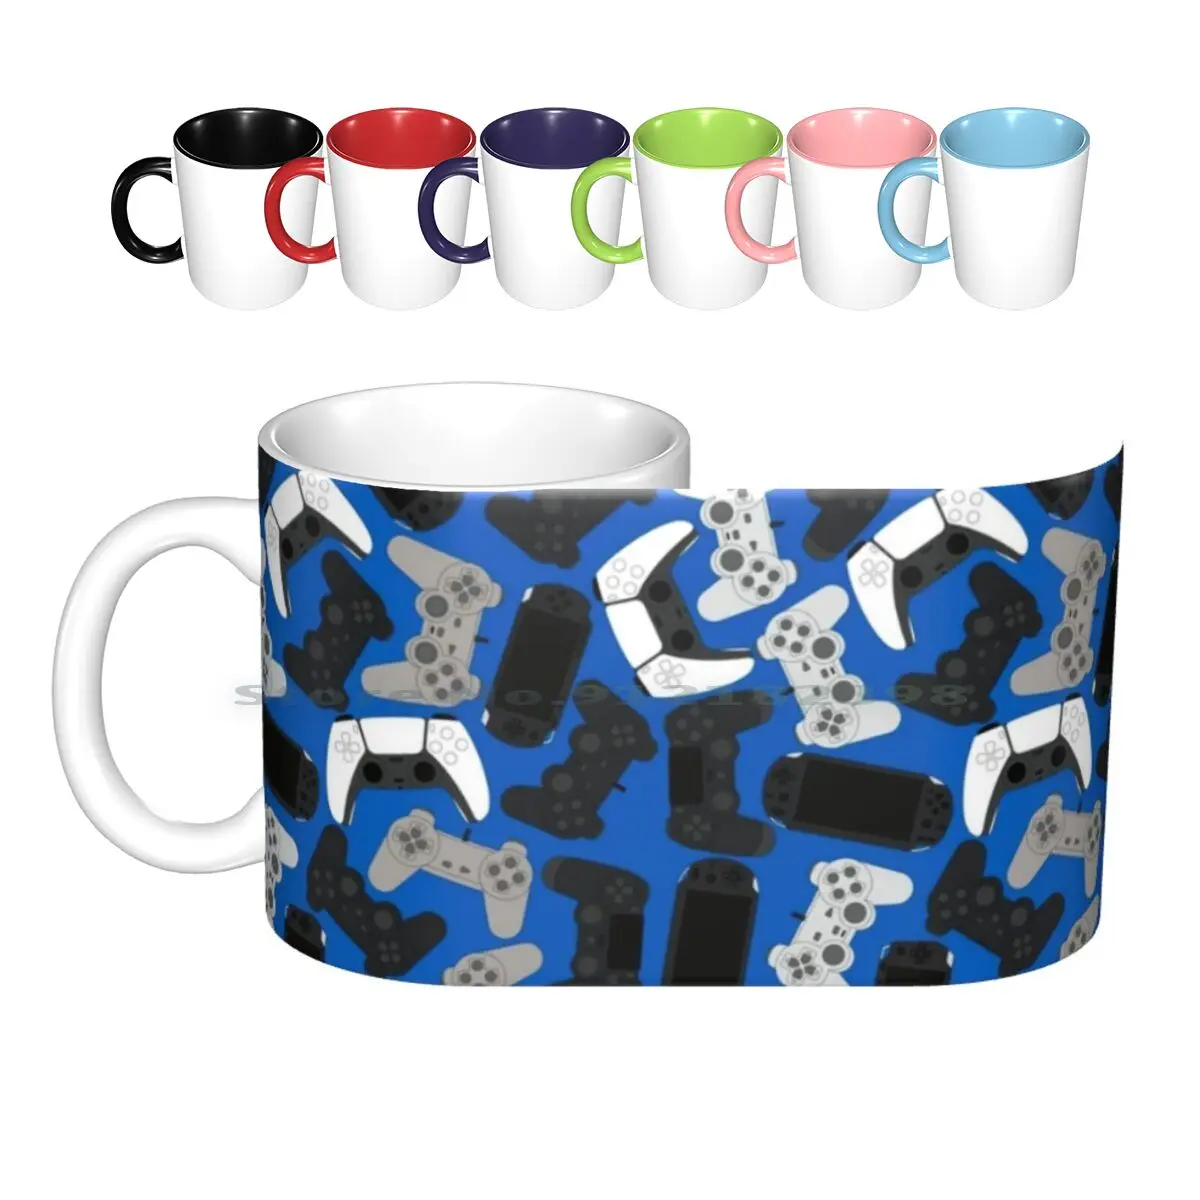 

Gamer Controller Ps Fans ( Blue ) Ceramic Mugs Coffee Cups Milk Tea Mug Play Videogames Retro Geek Culture Pixel Bit 8bit Style